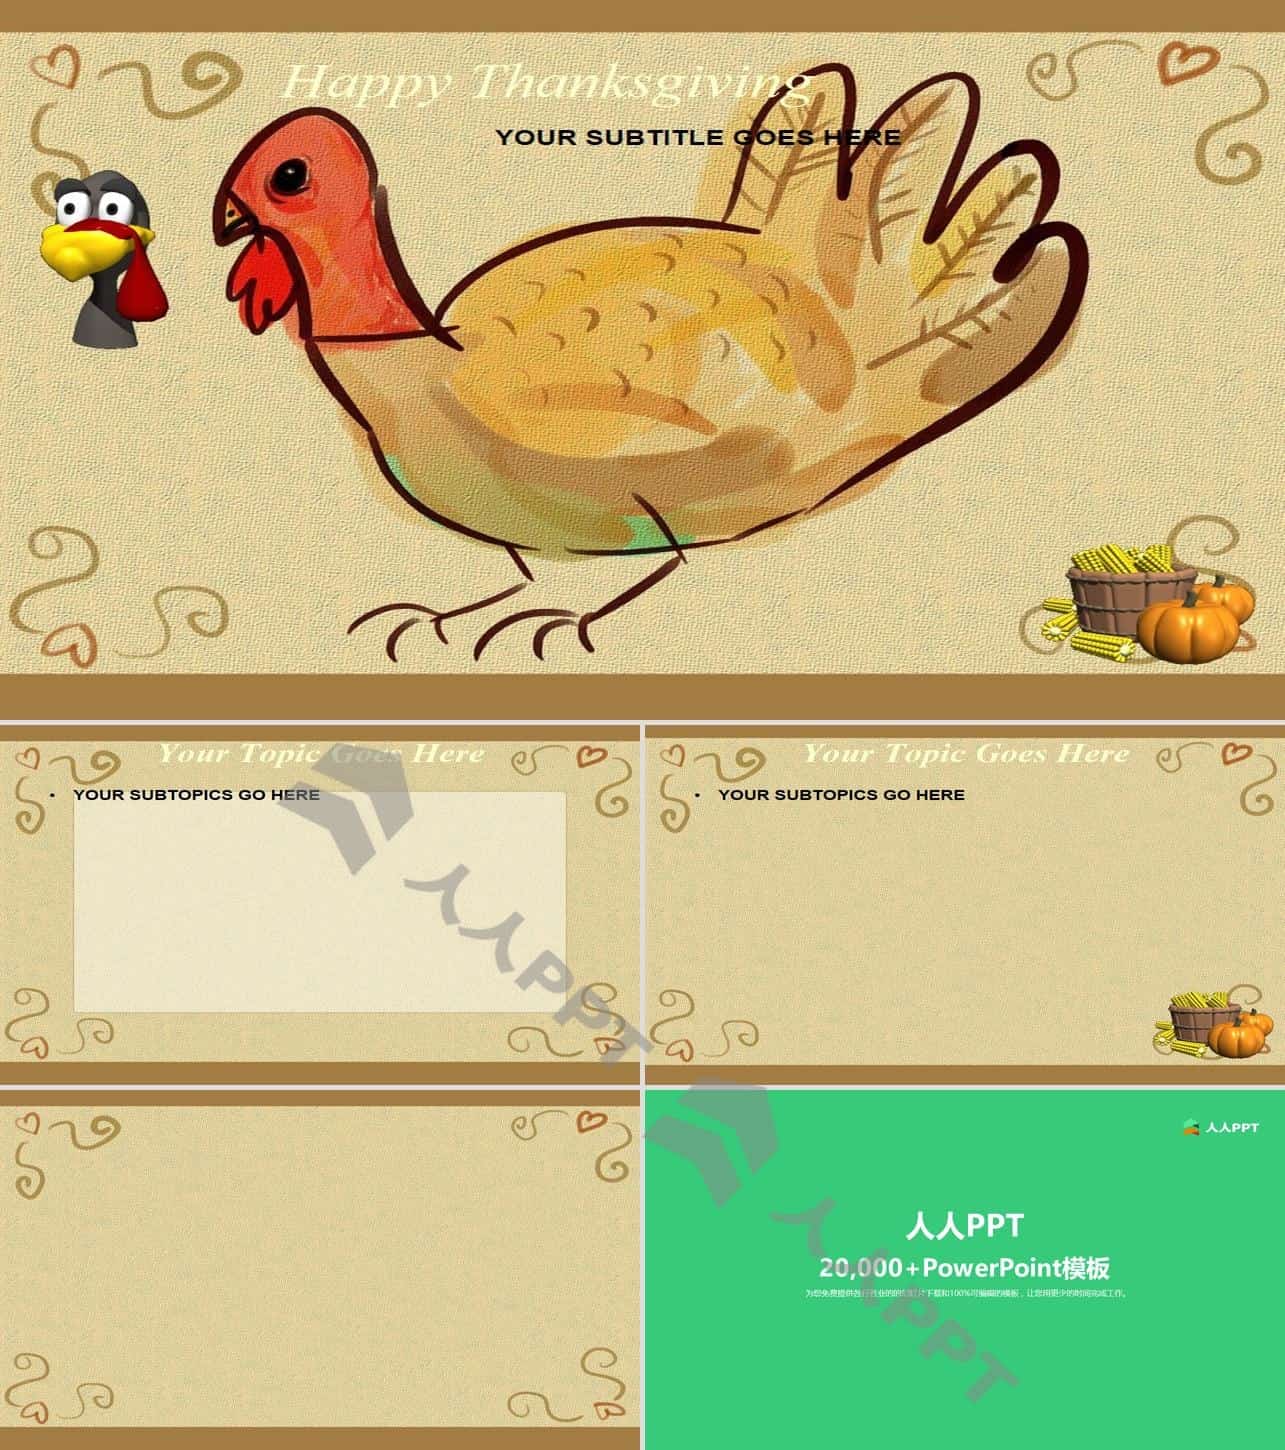 Happy Thanksgiving火鸡主题感恩节PPT模板长图